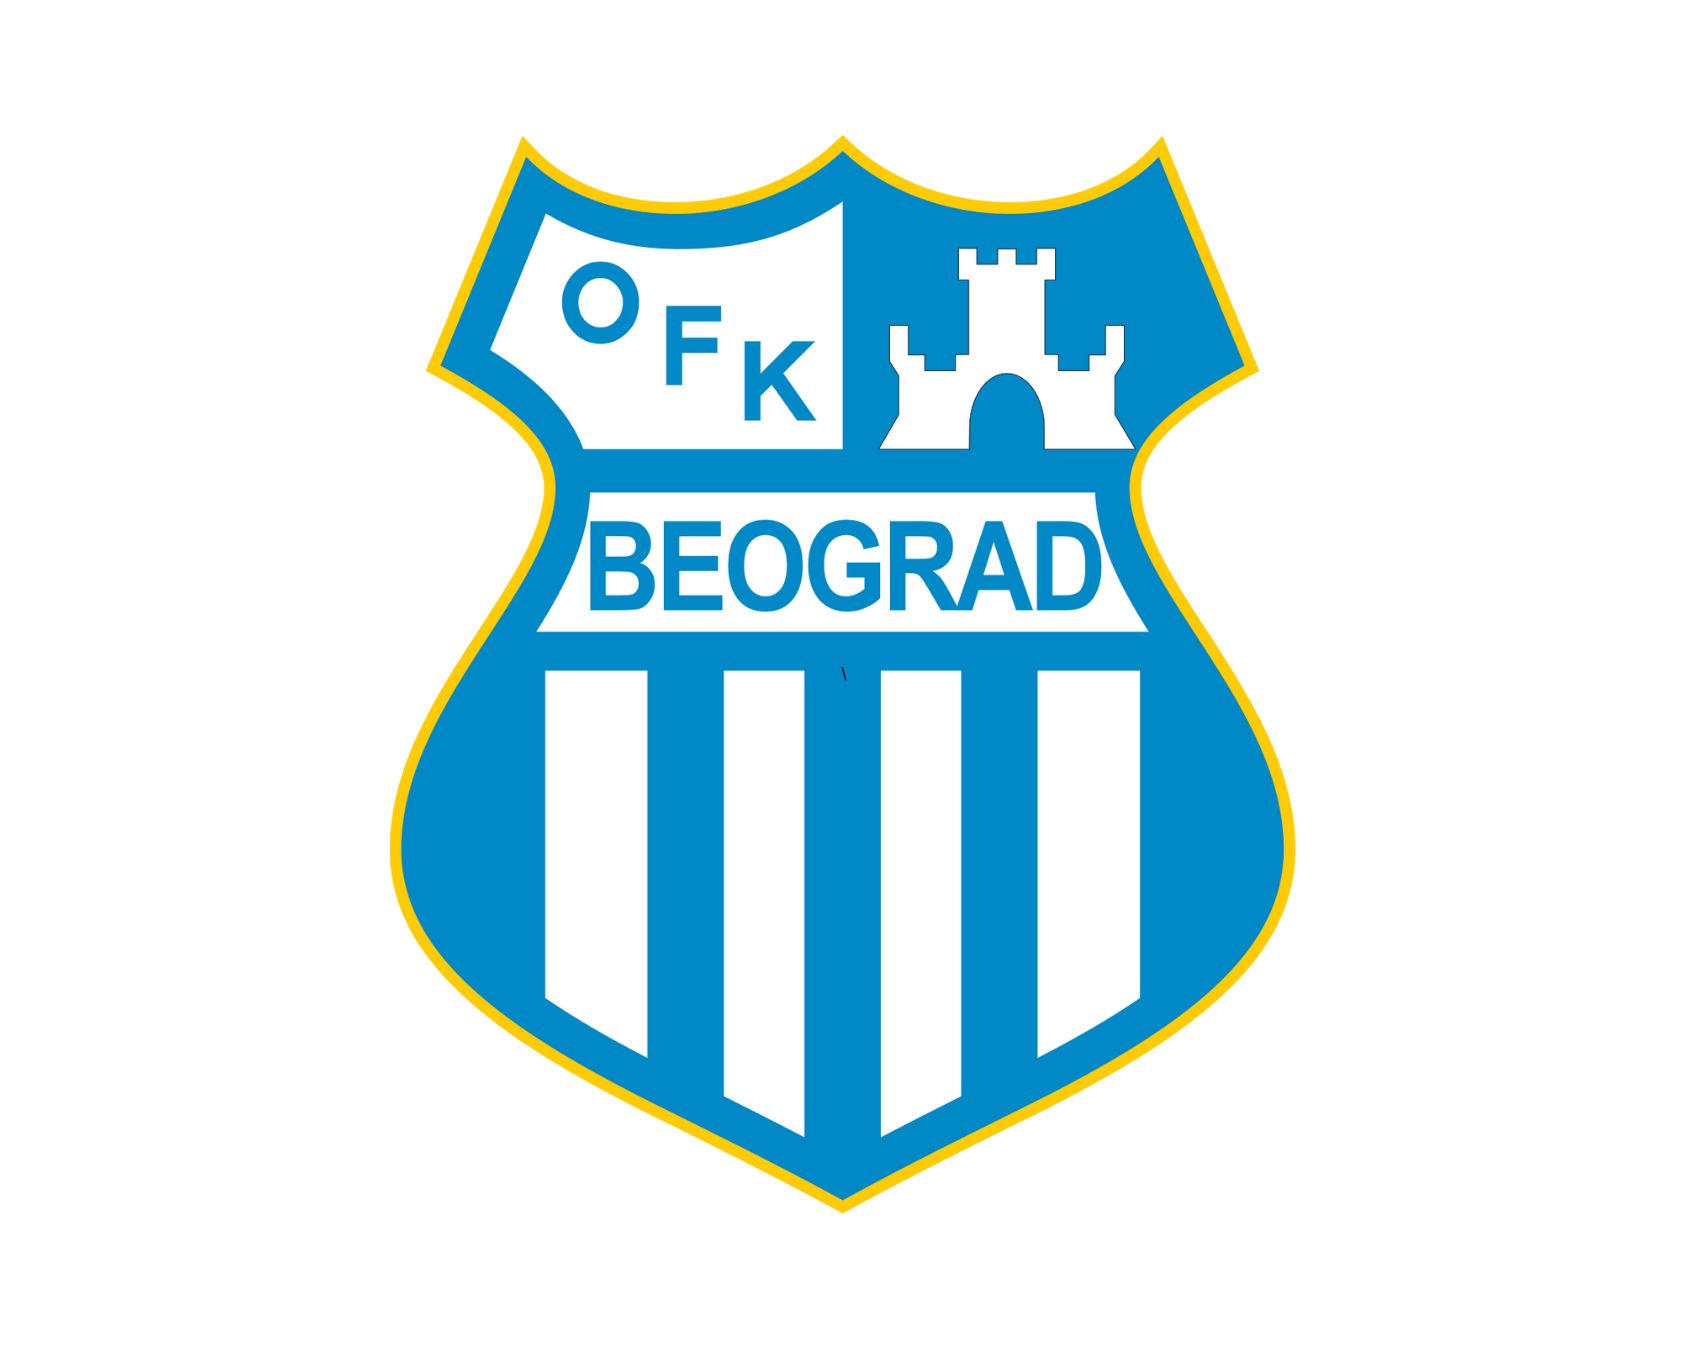 ofk-beograd-23-football-club-facts